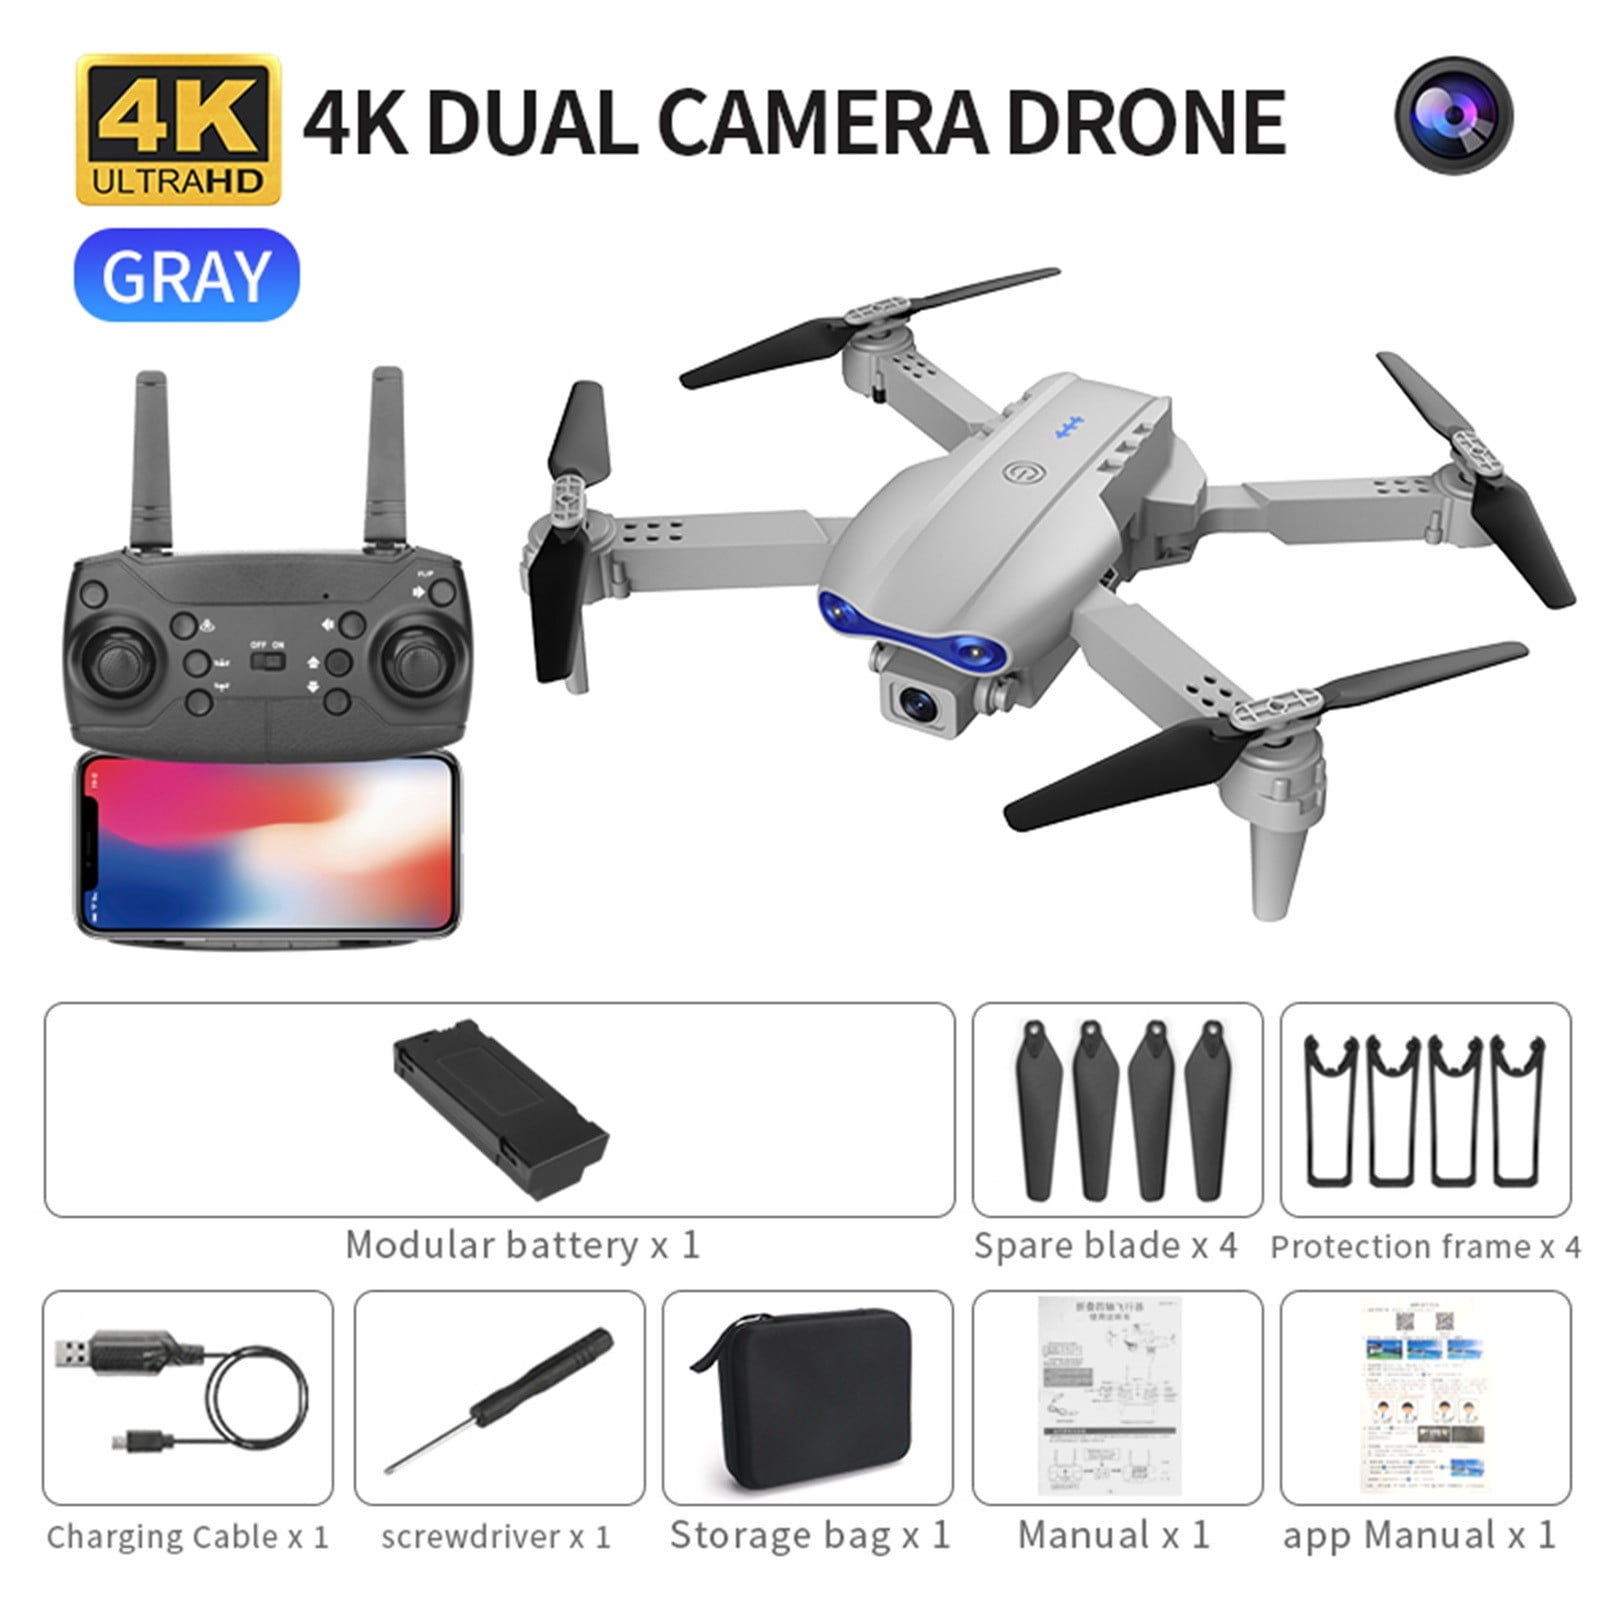 Monday Deals Tuscom Long Battery Life K3 Drone Hd 4K Single Camera -